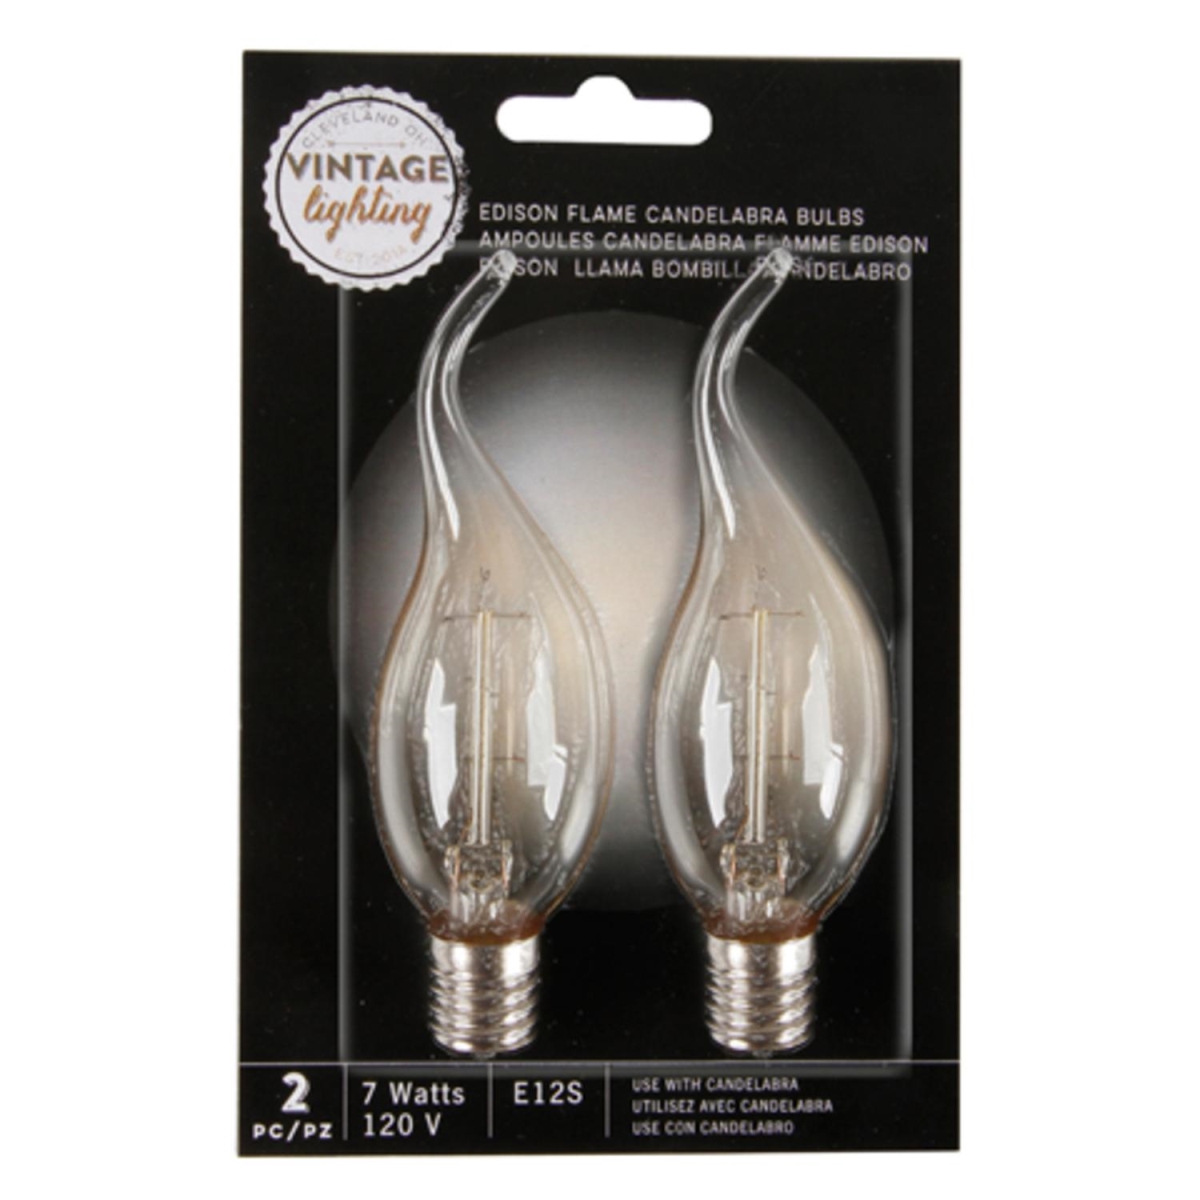 32038409 7 Watt Cleveland Vintage Lighting Edison Style E12s Base Flame Candelabra Bulbs - Pack Of 2